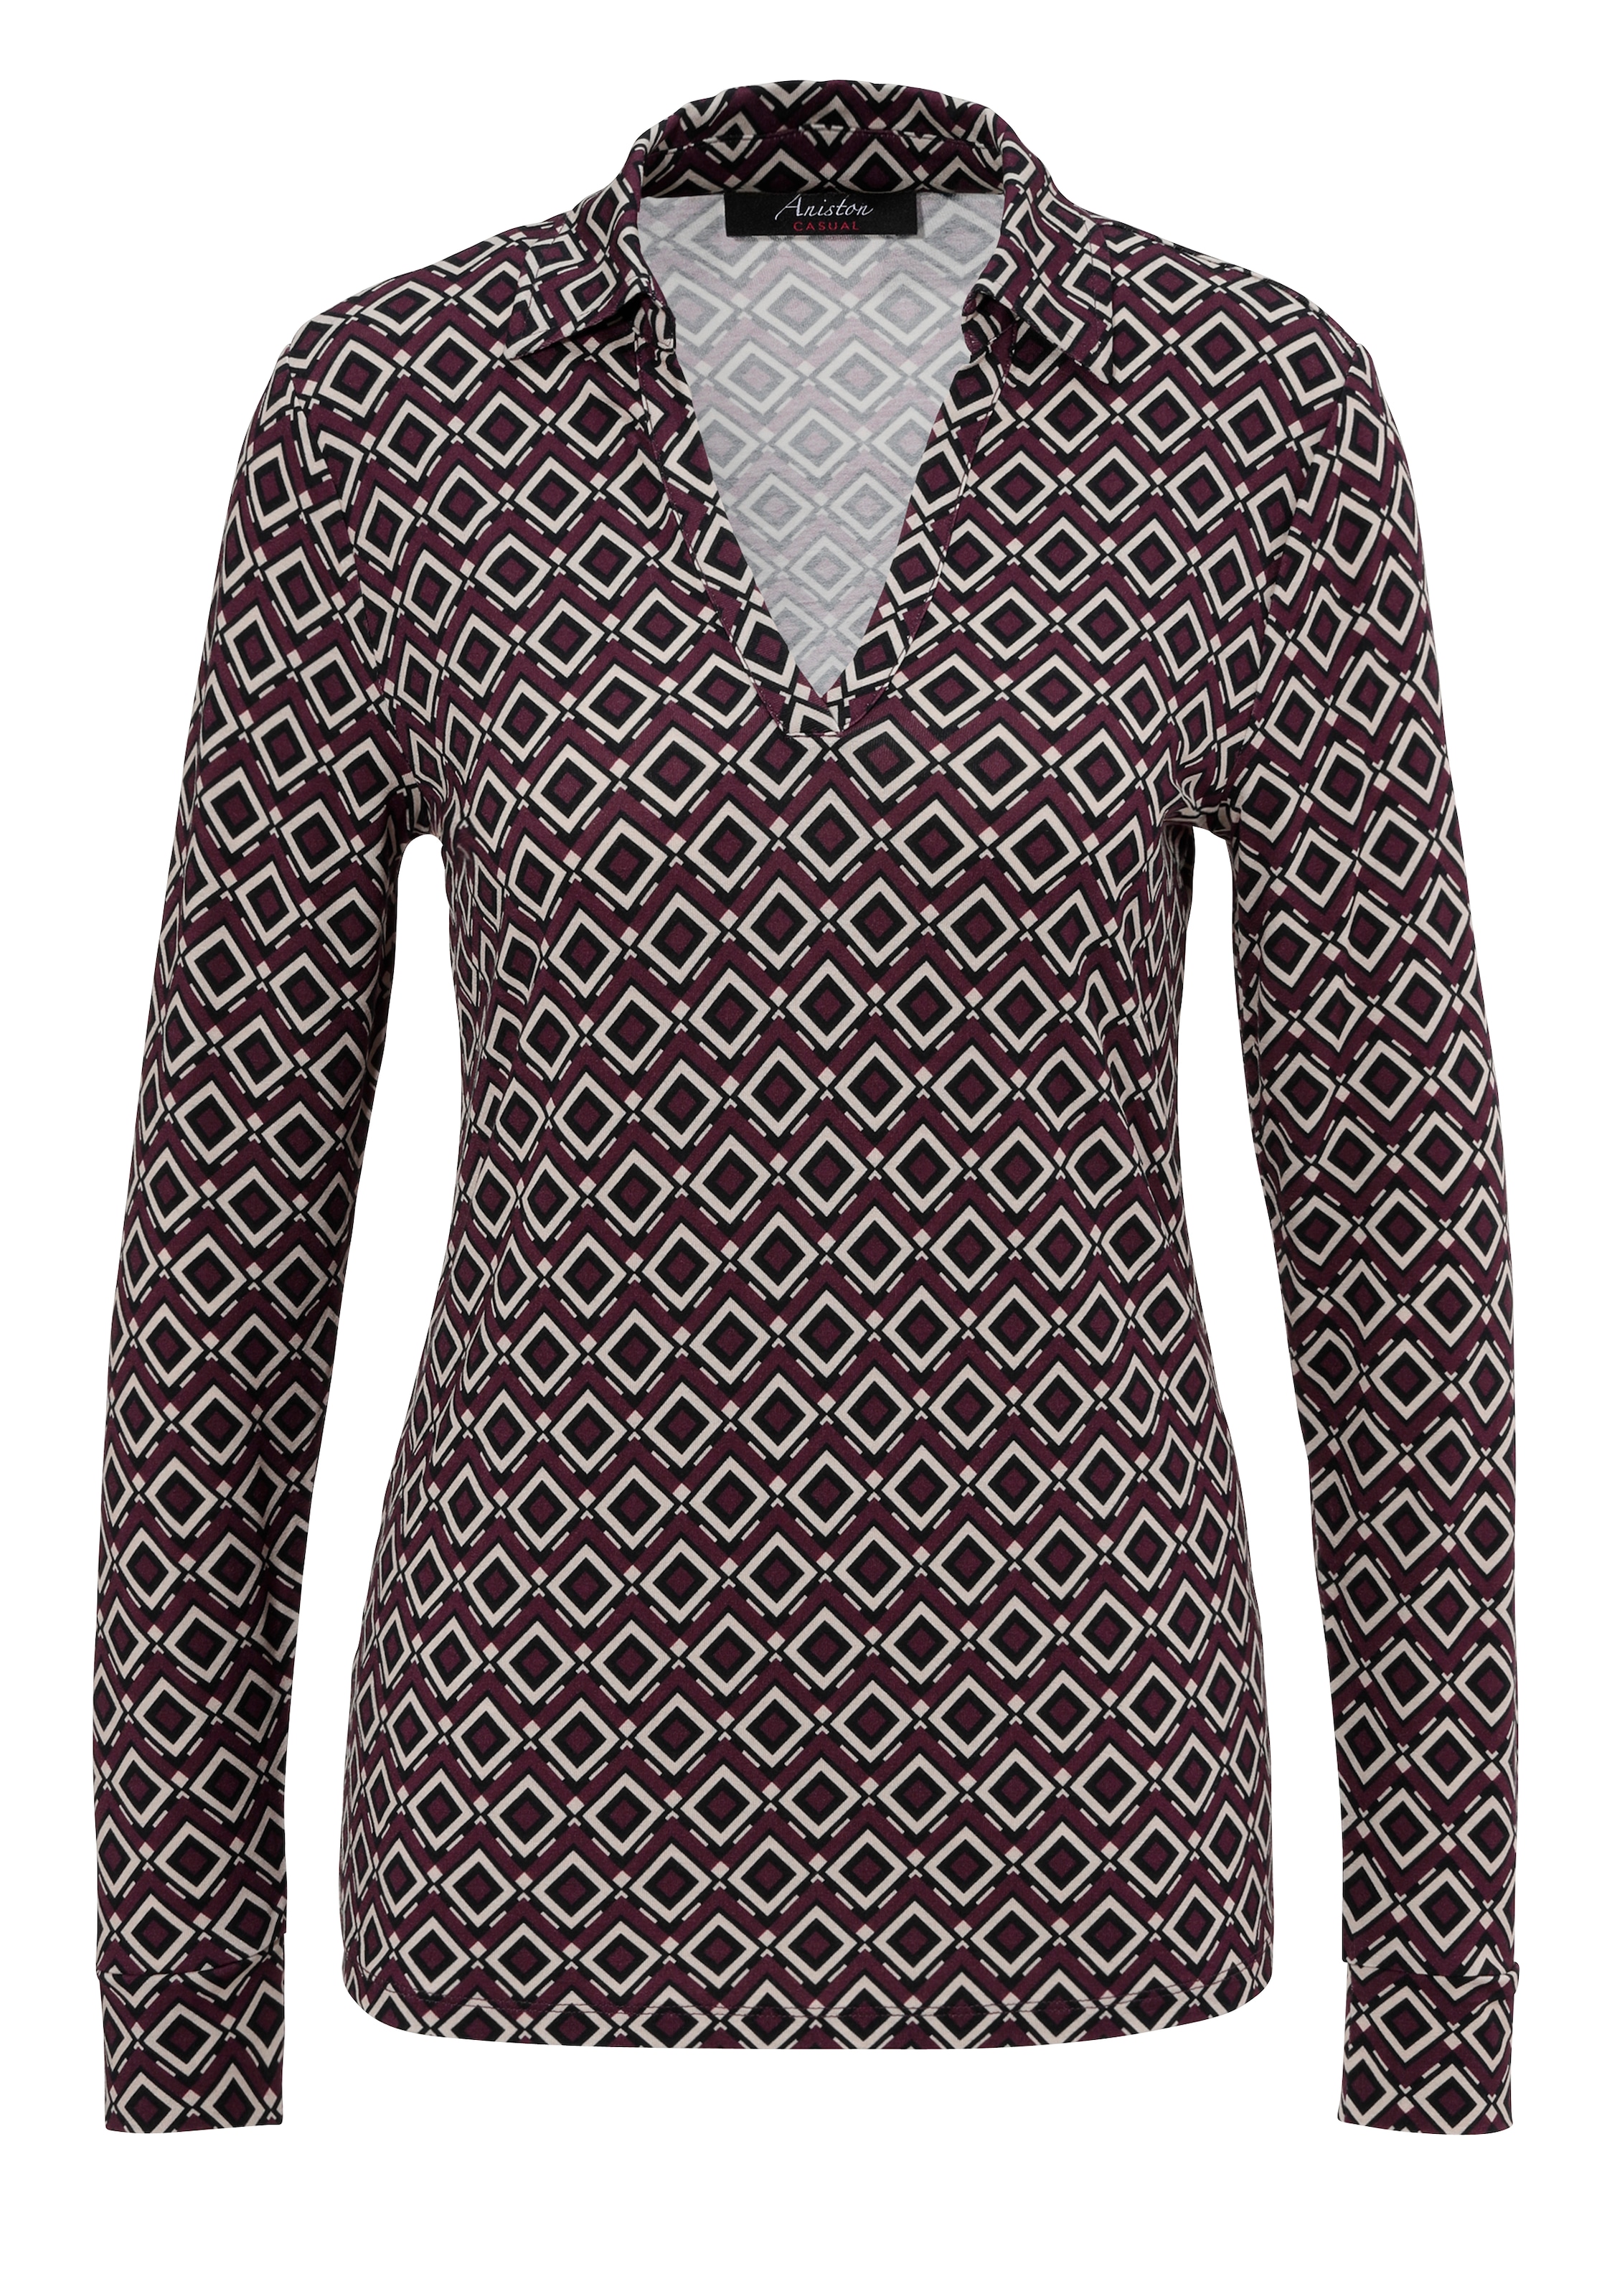 Aniston CASUAL Shirtbluse, mit trendfarbenem Retro-Muster - NEUE KOLLEKTION